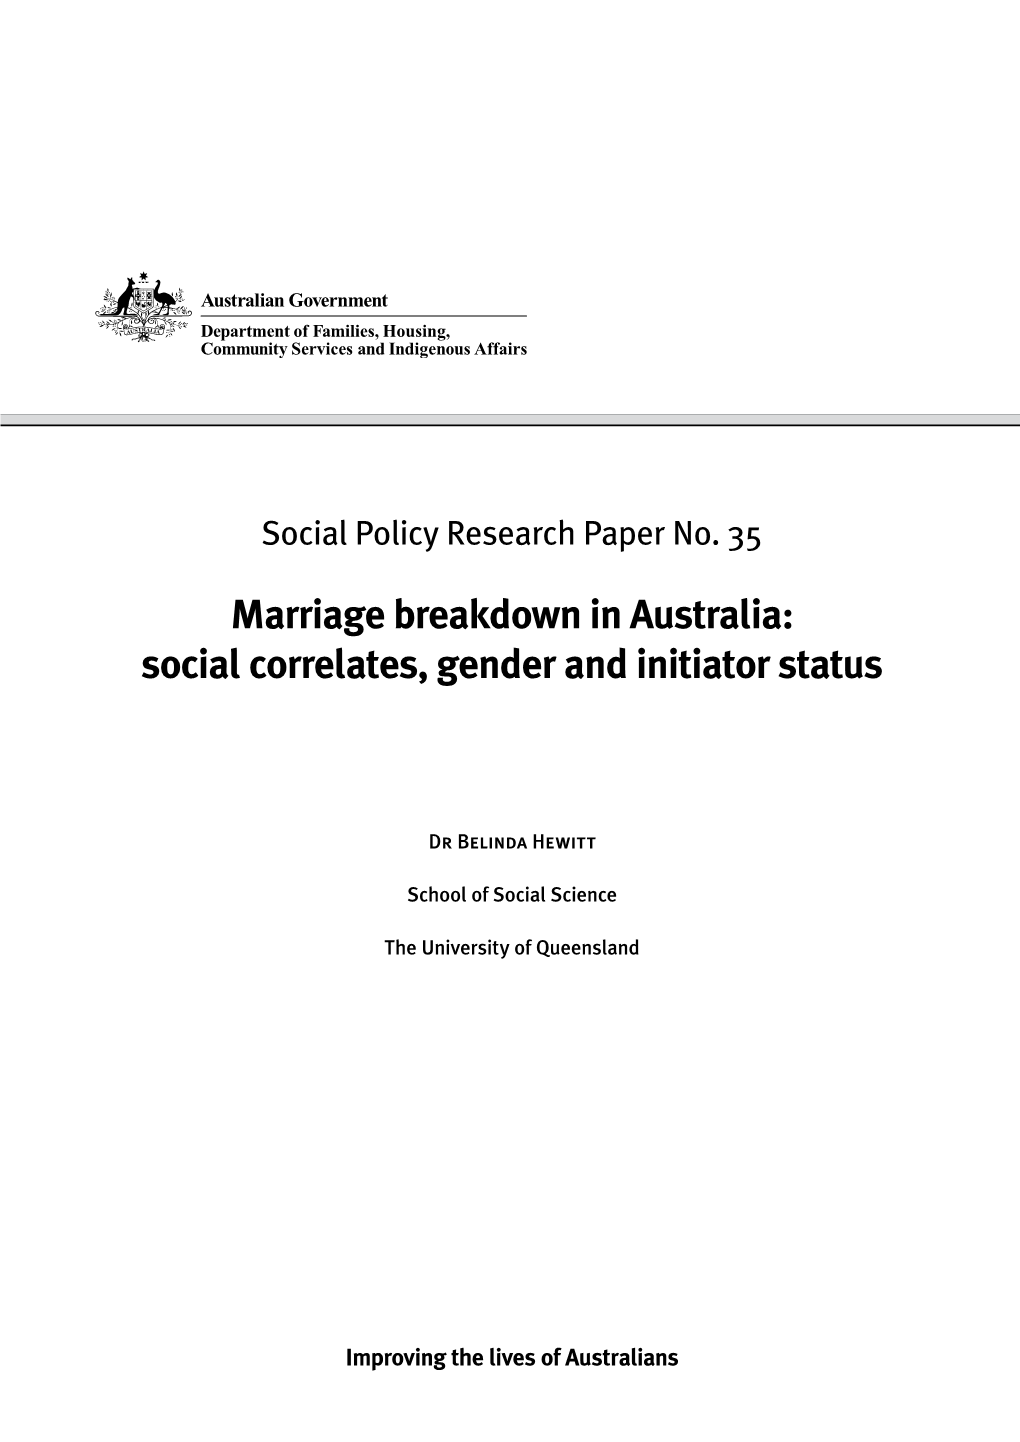 Marriage Breakdown in Australia: Social Correlates, Gender and Initiator Status